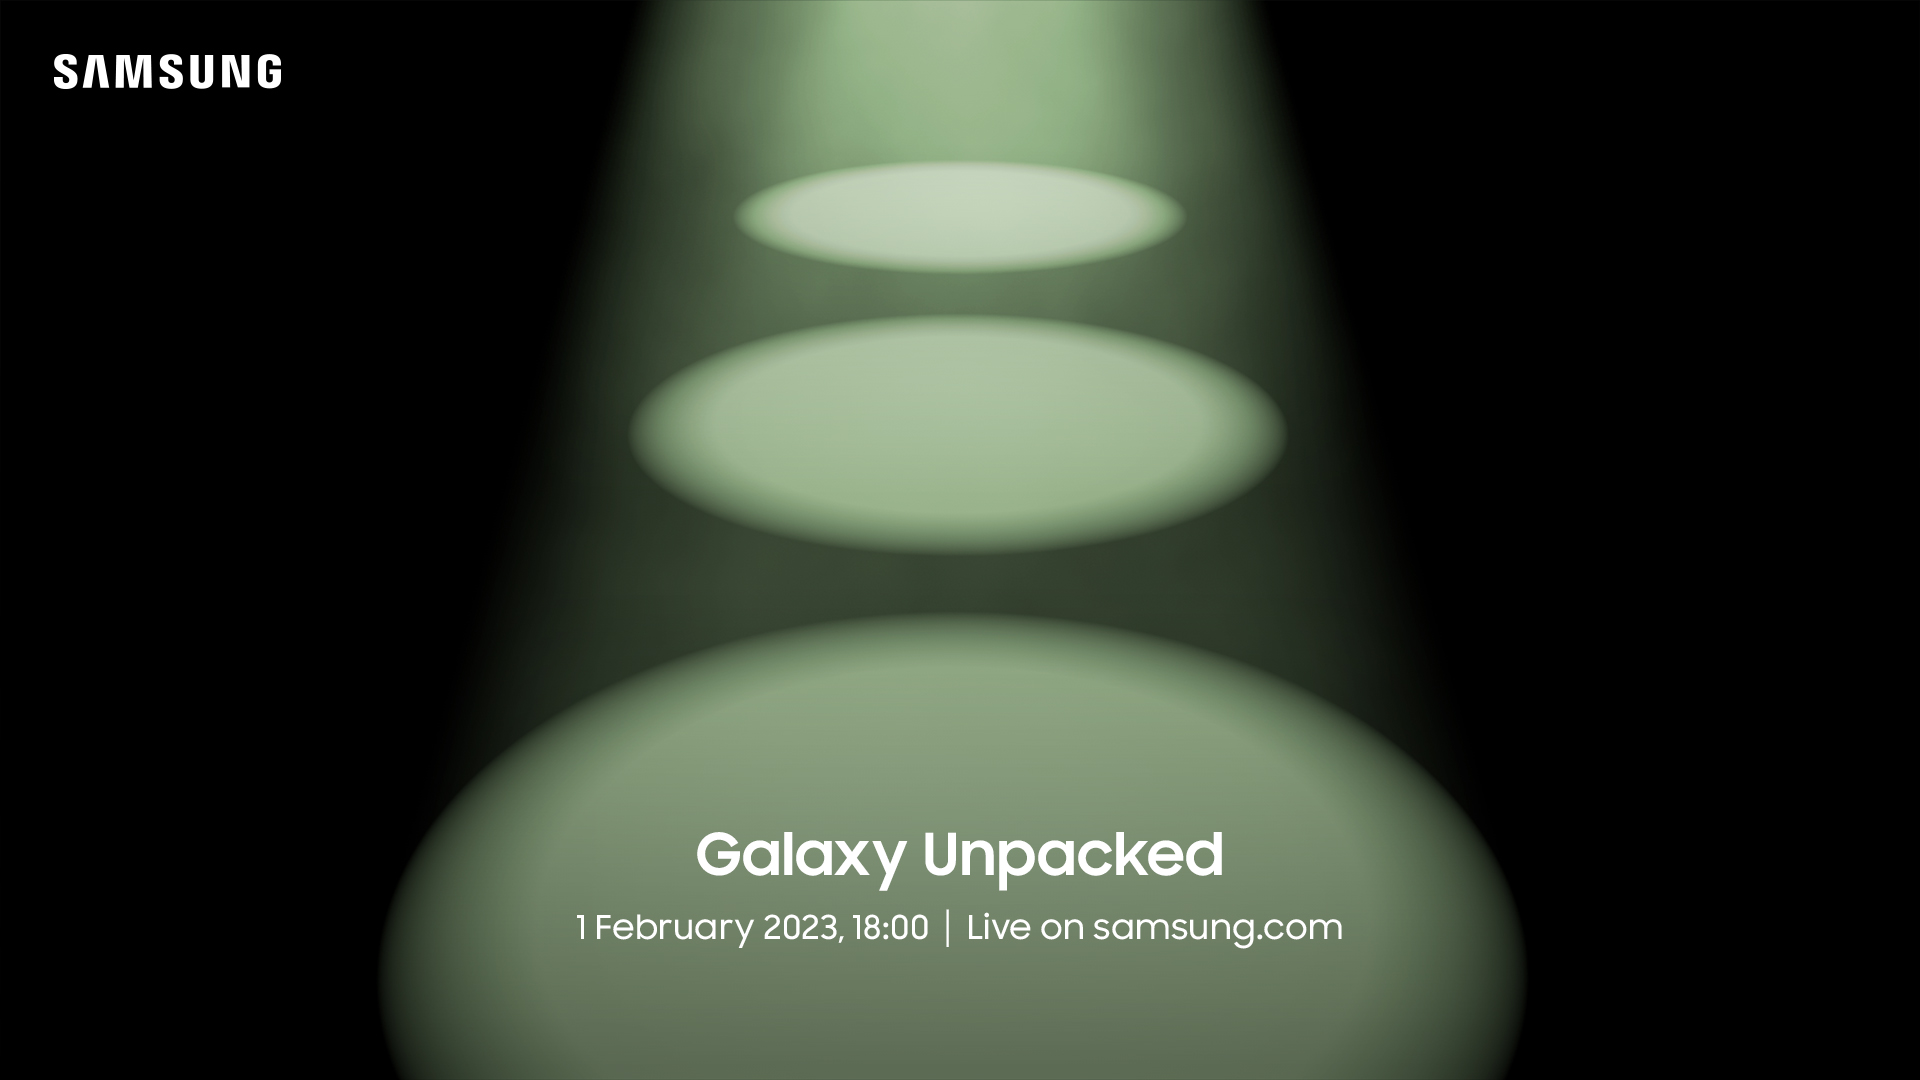 Galaxy unpacked